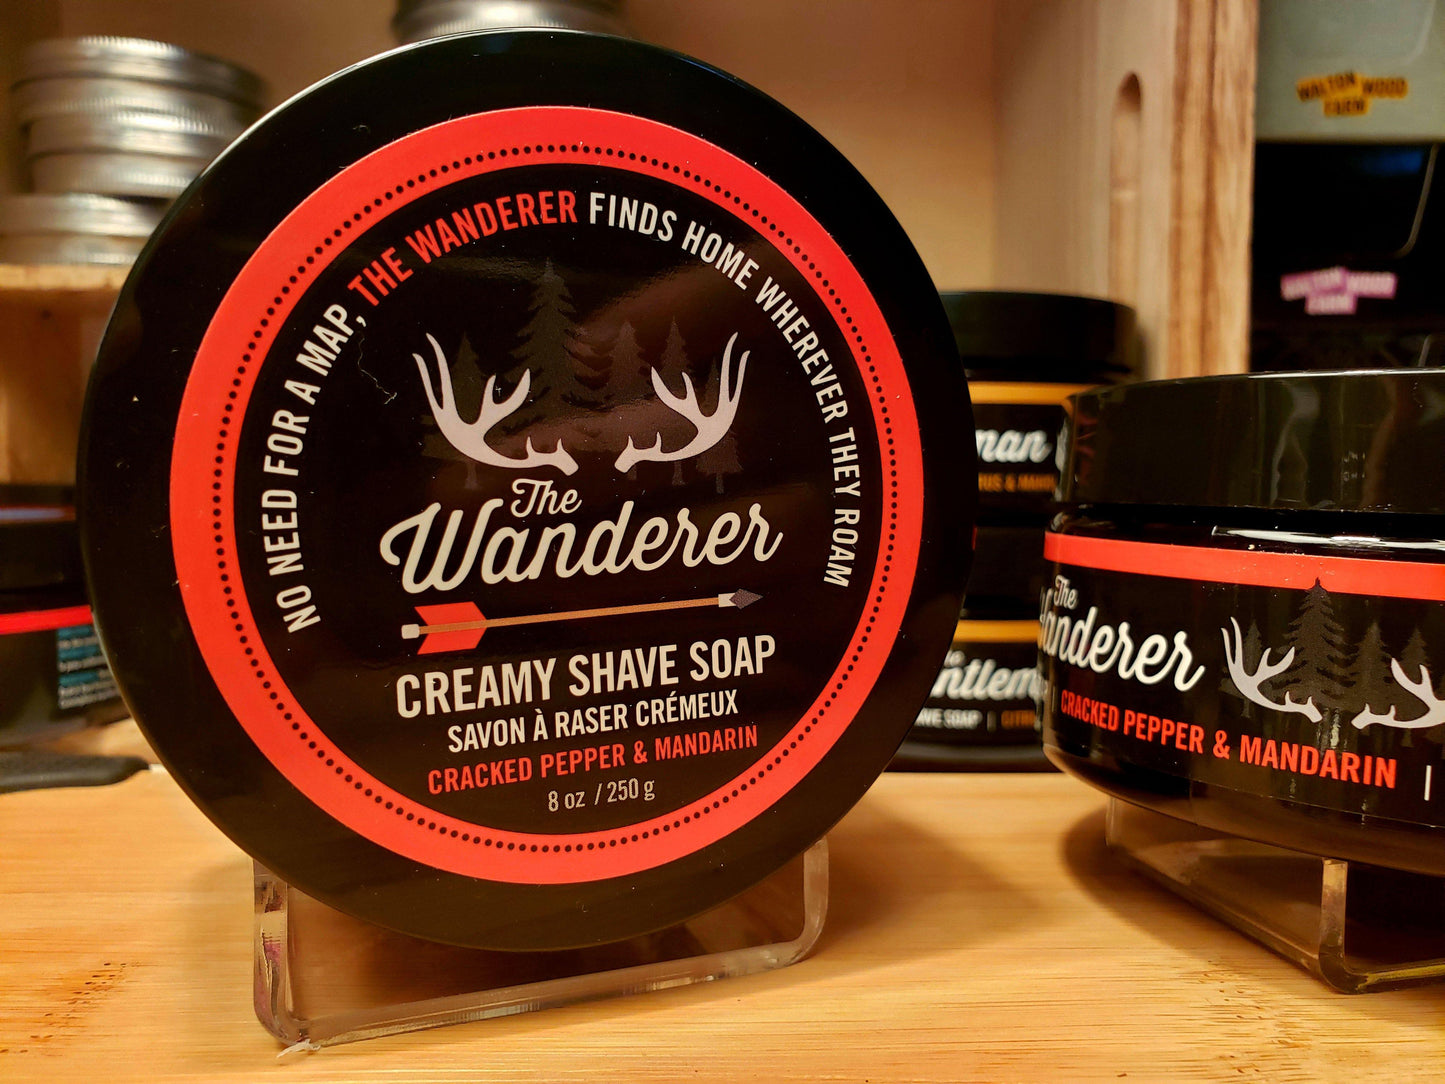 Wanderer Creamy Shave Soap - Cracked Pepper & Mandarin - The Wandering Merchant